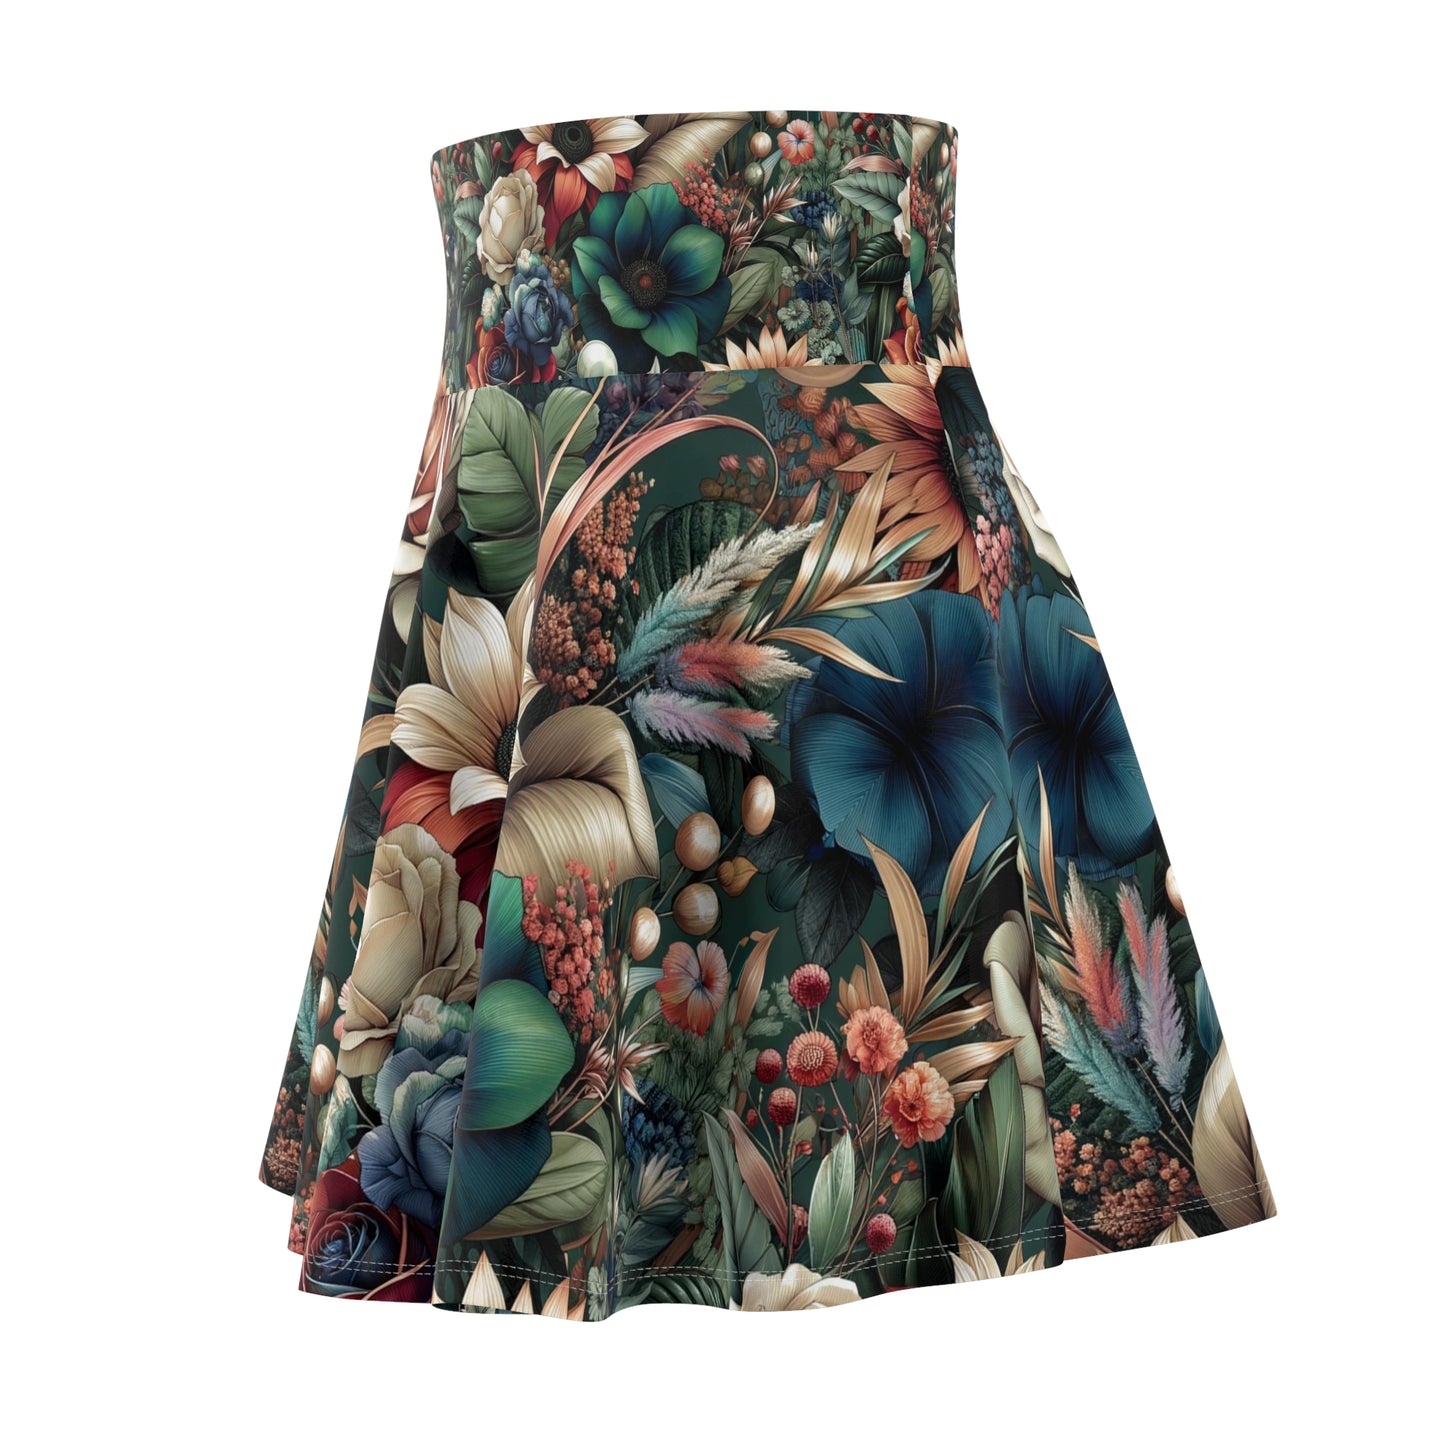 "Floral Symphony" Artistic Jewel-Tone Women's Skater Skirt